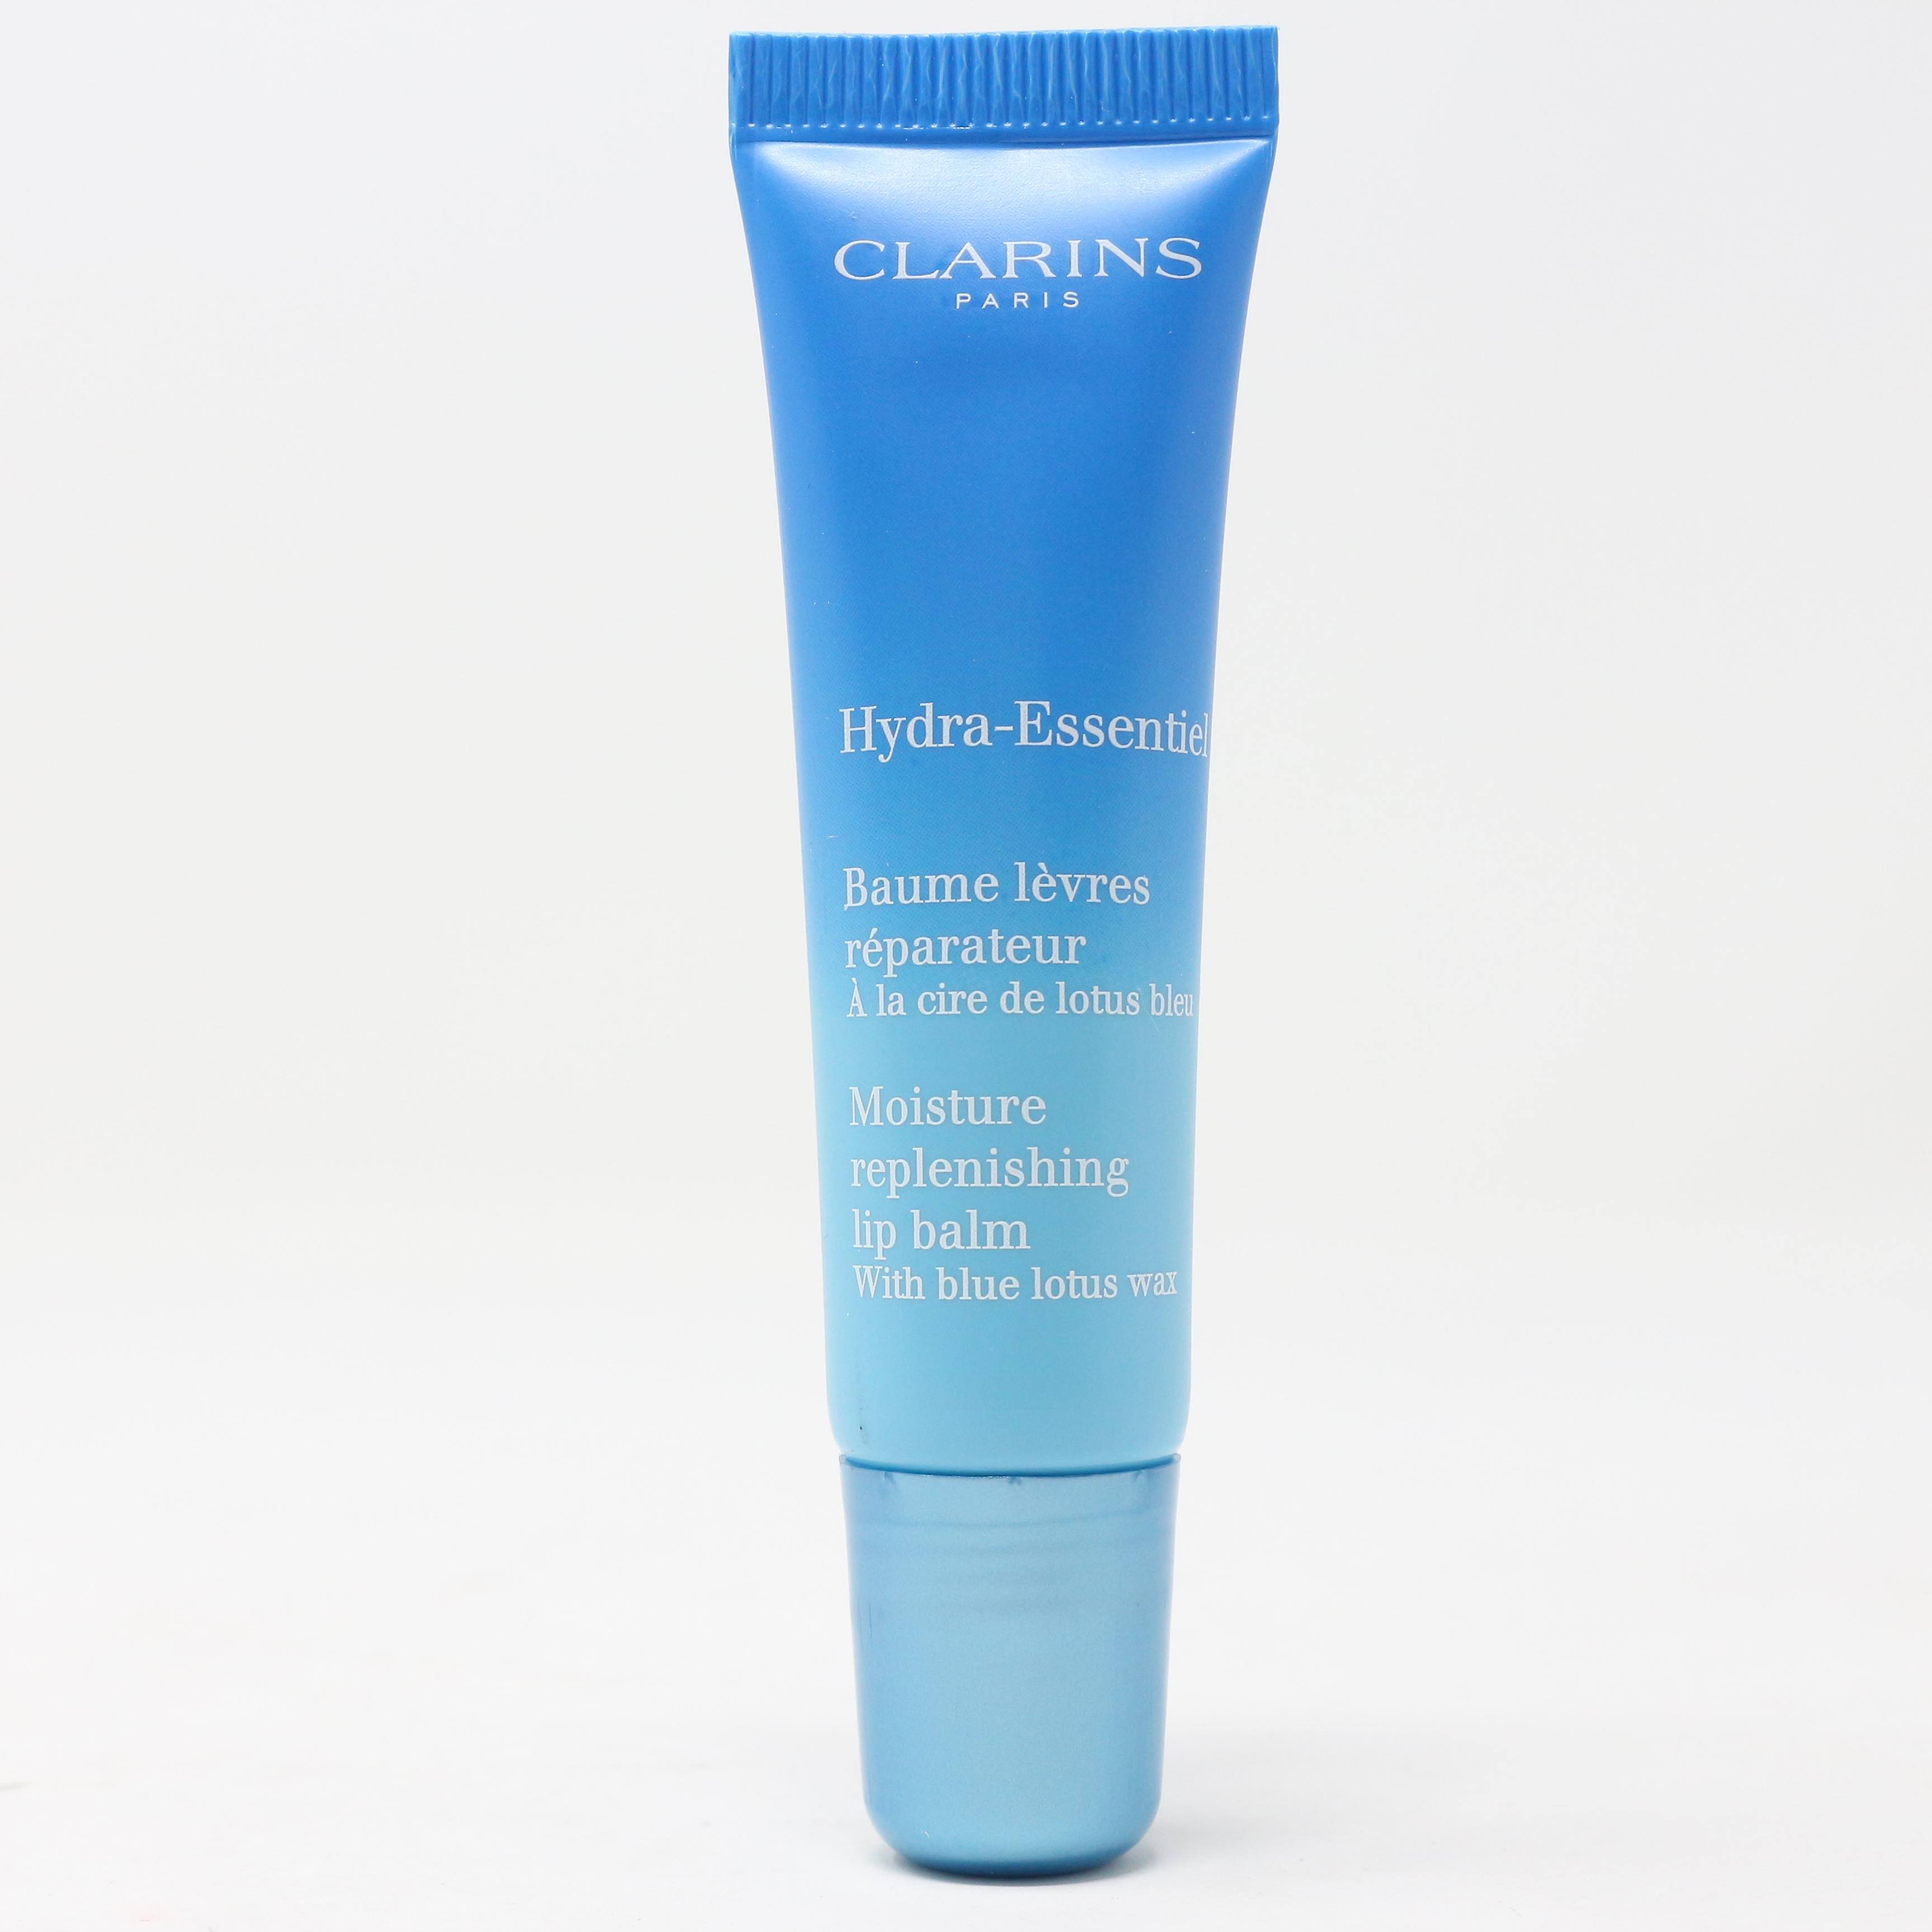 Clarins Hydra Essentiel Moisture Replenishing Lip Balm - with Blue Lotus Wax, 0.4oz